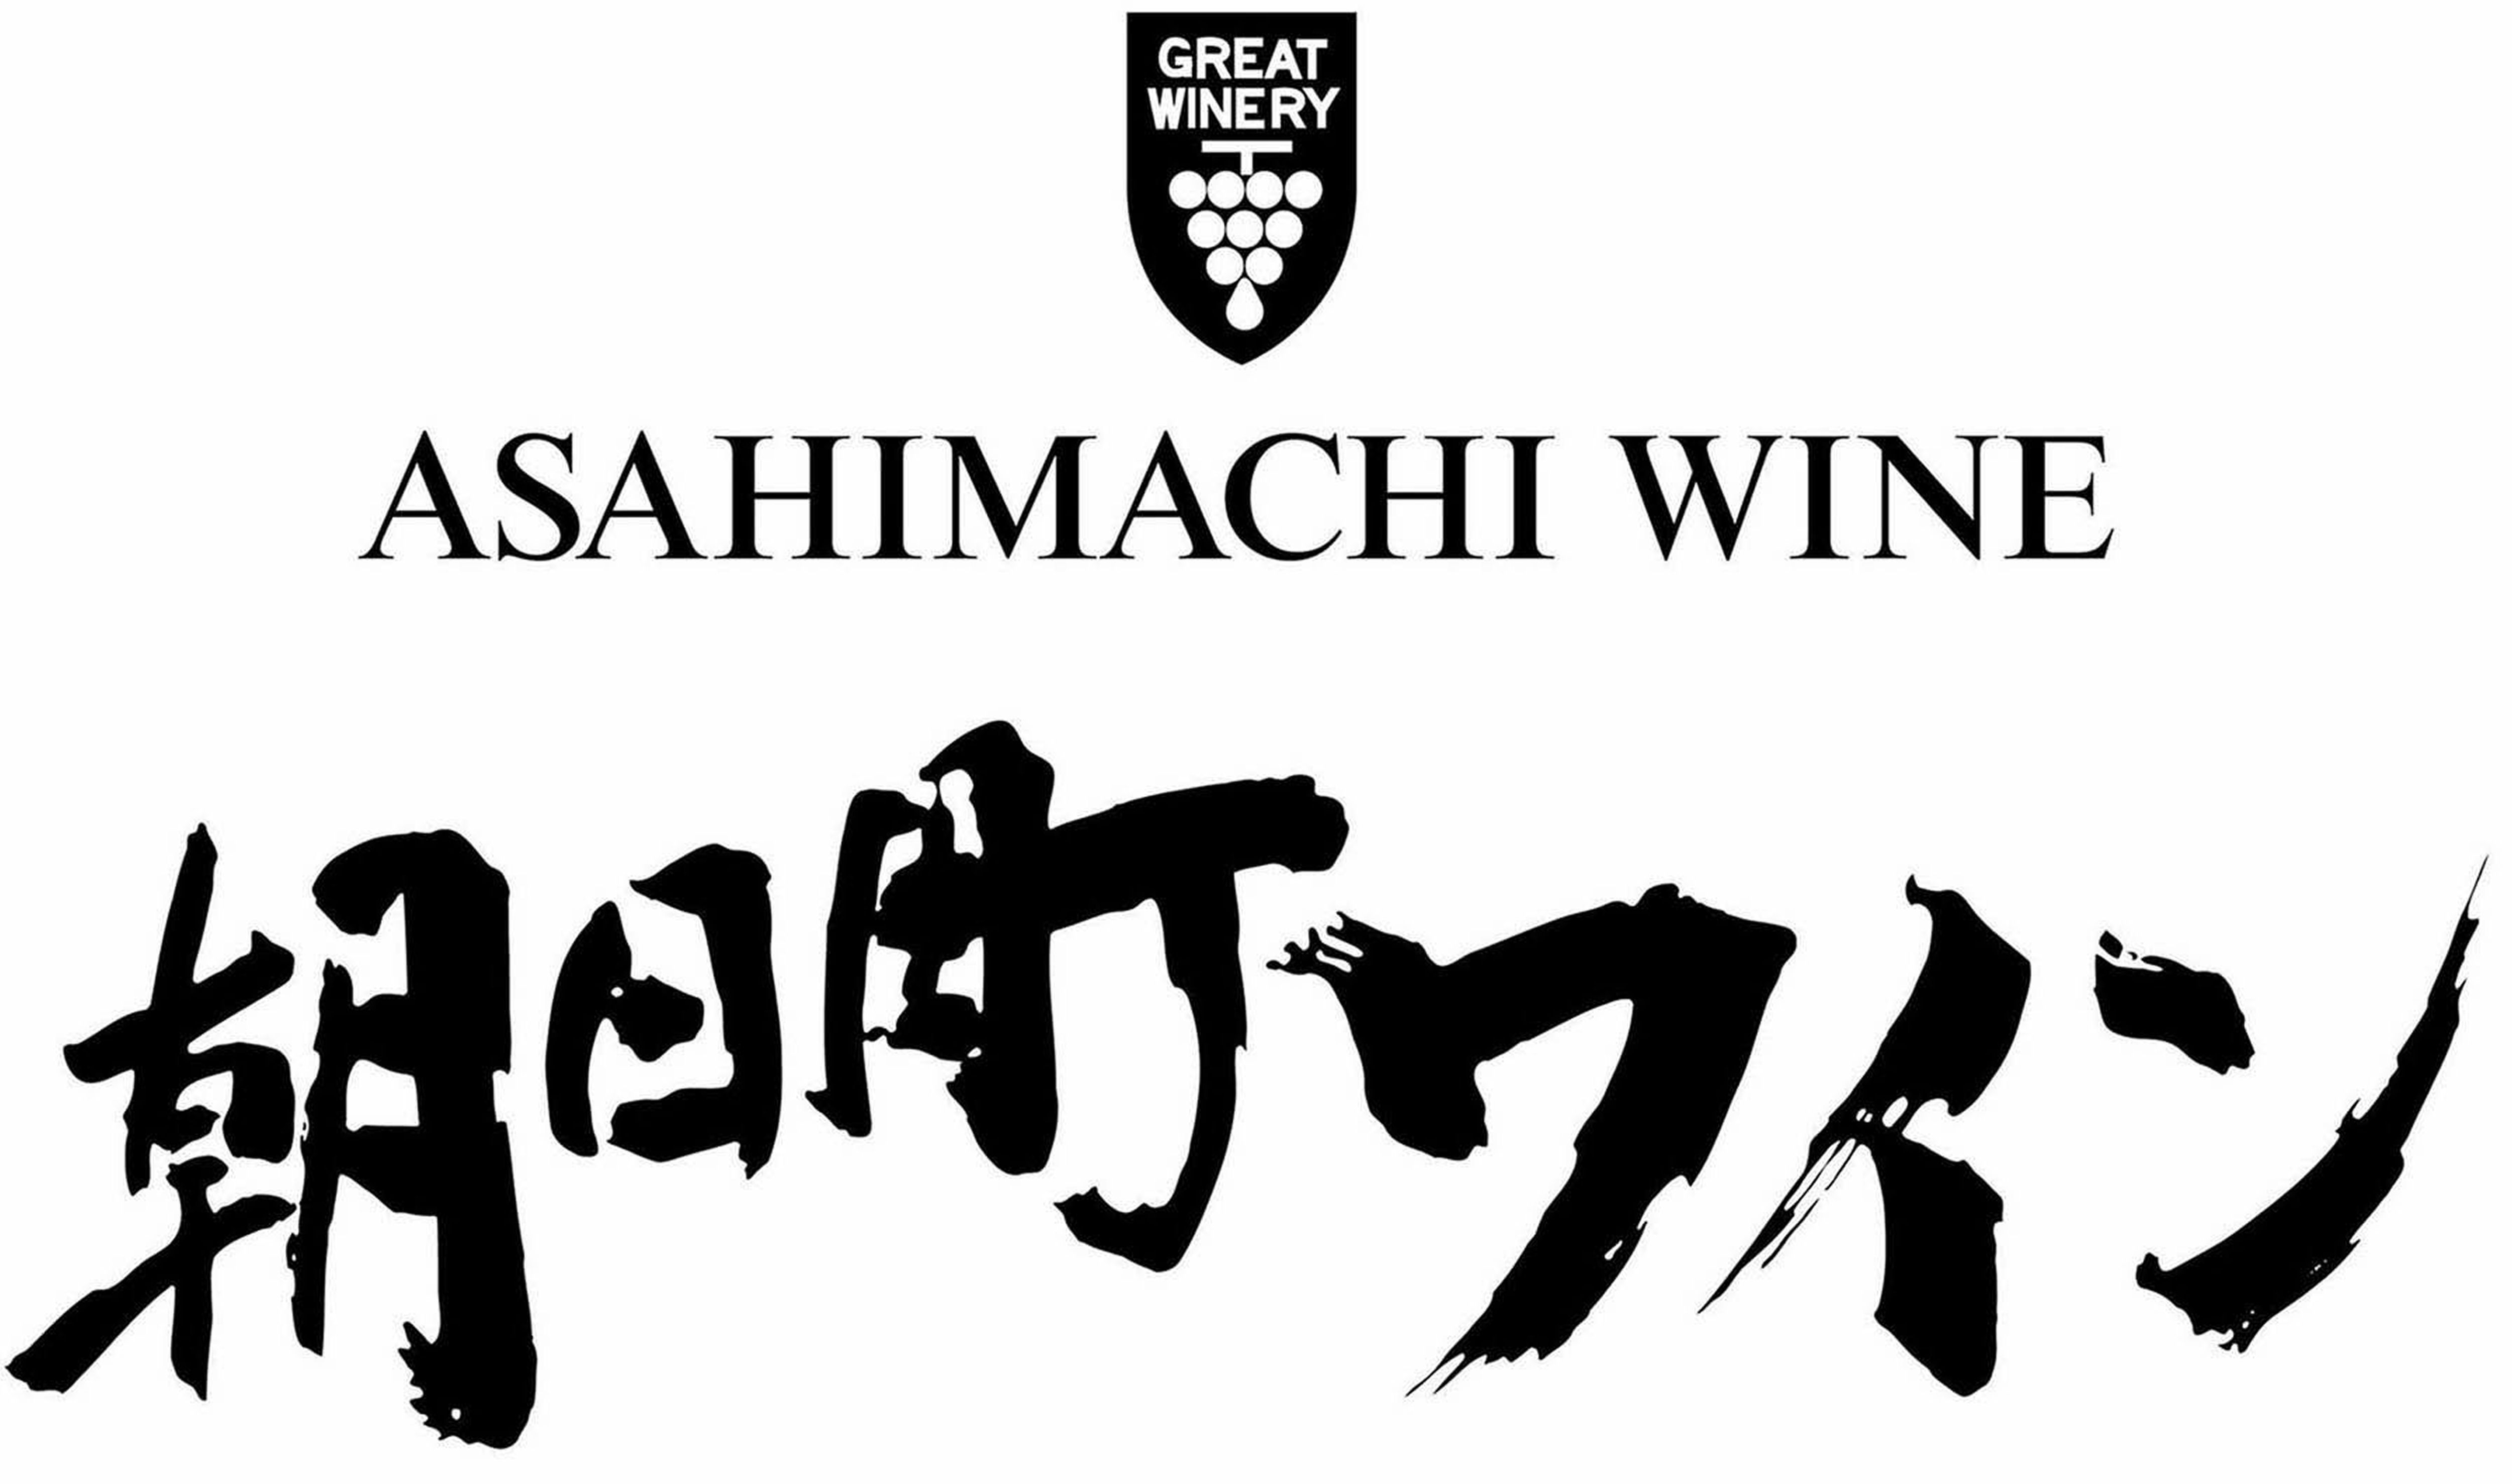 Asahi-machi Wine Co., Ltd.